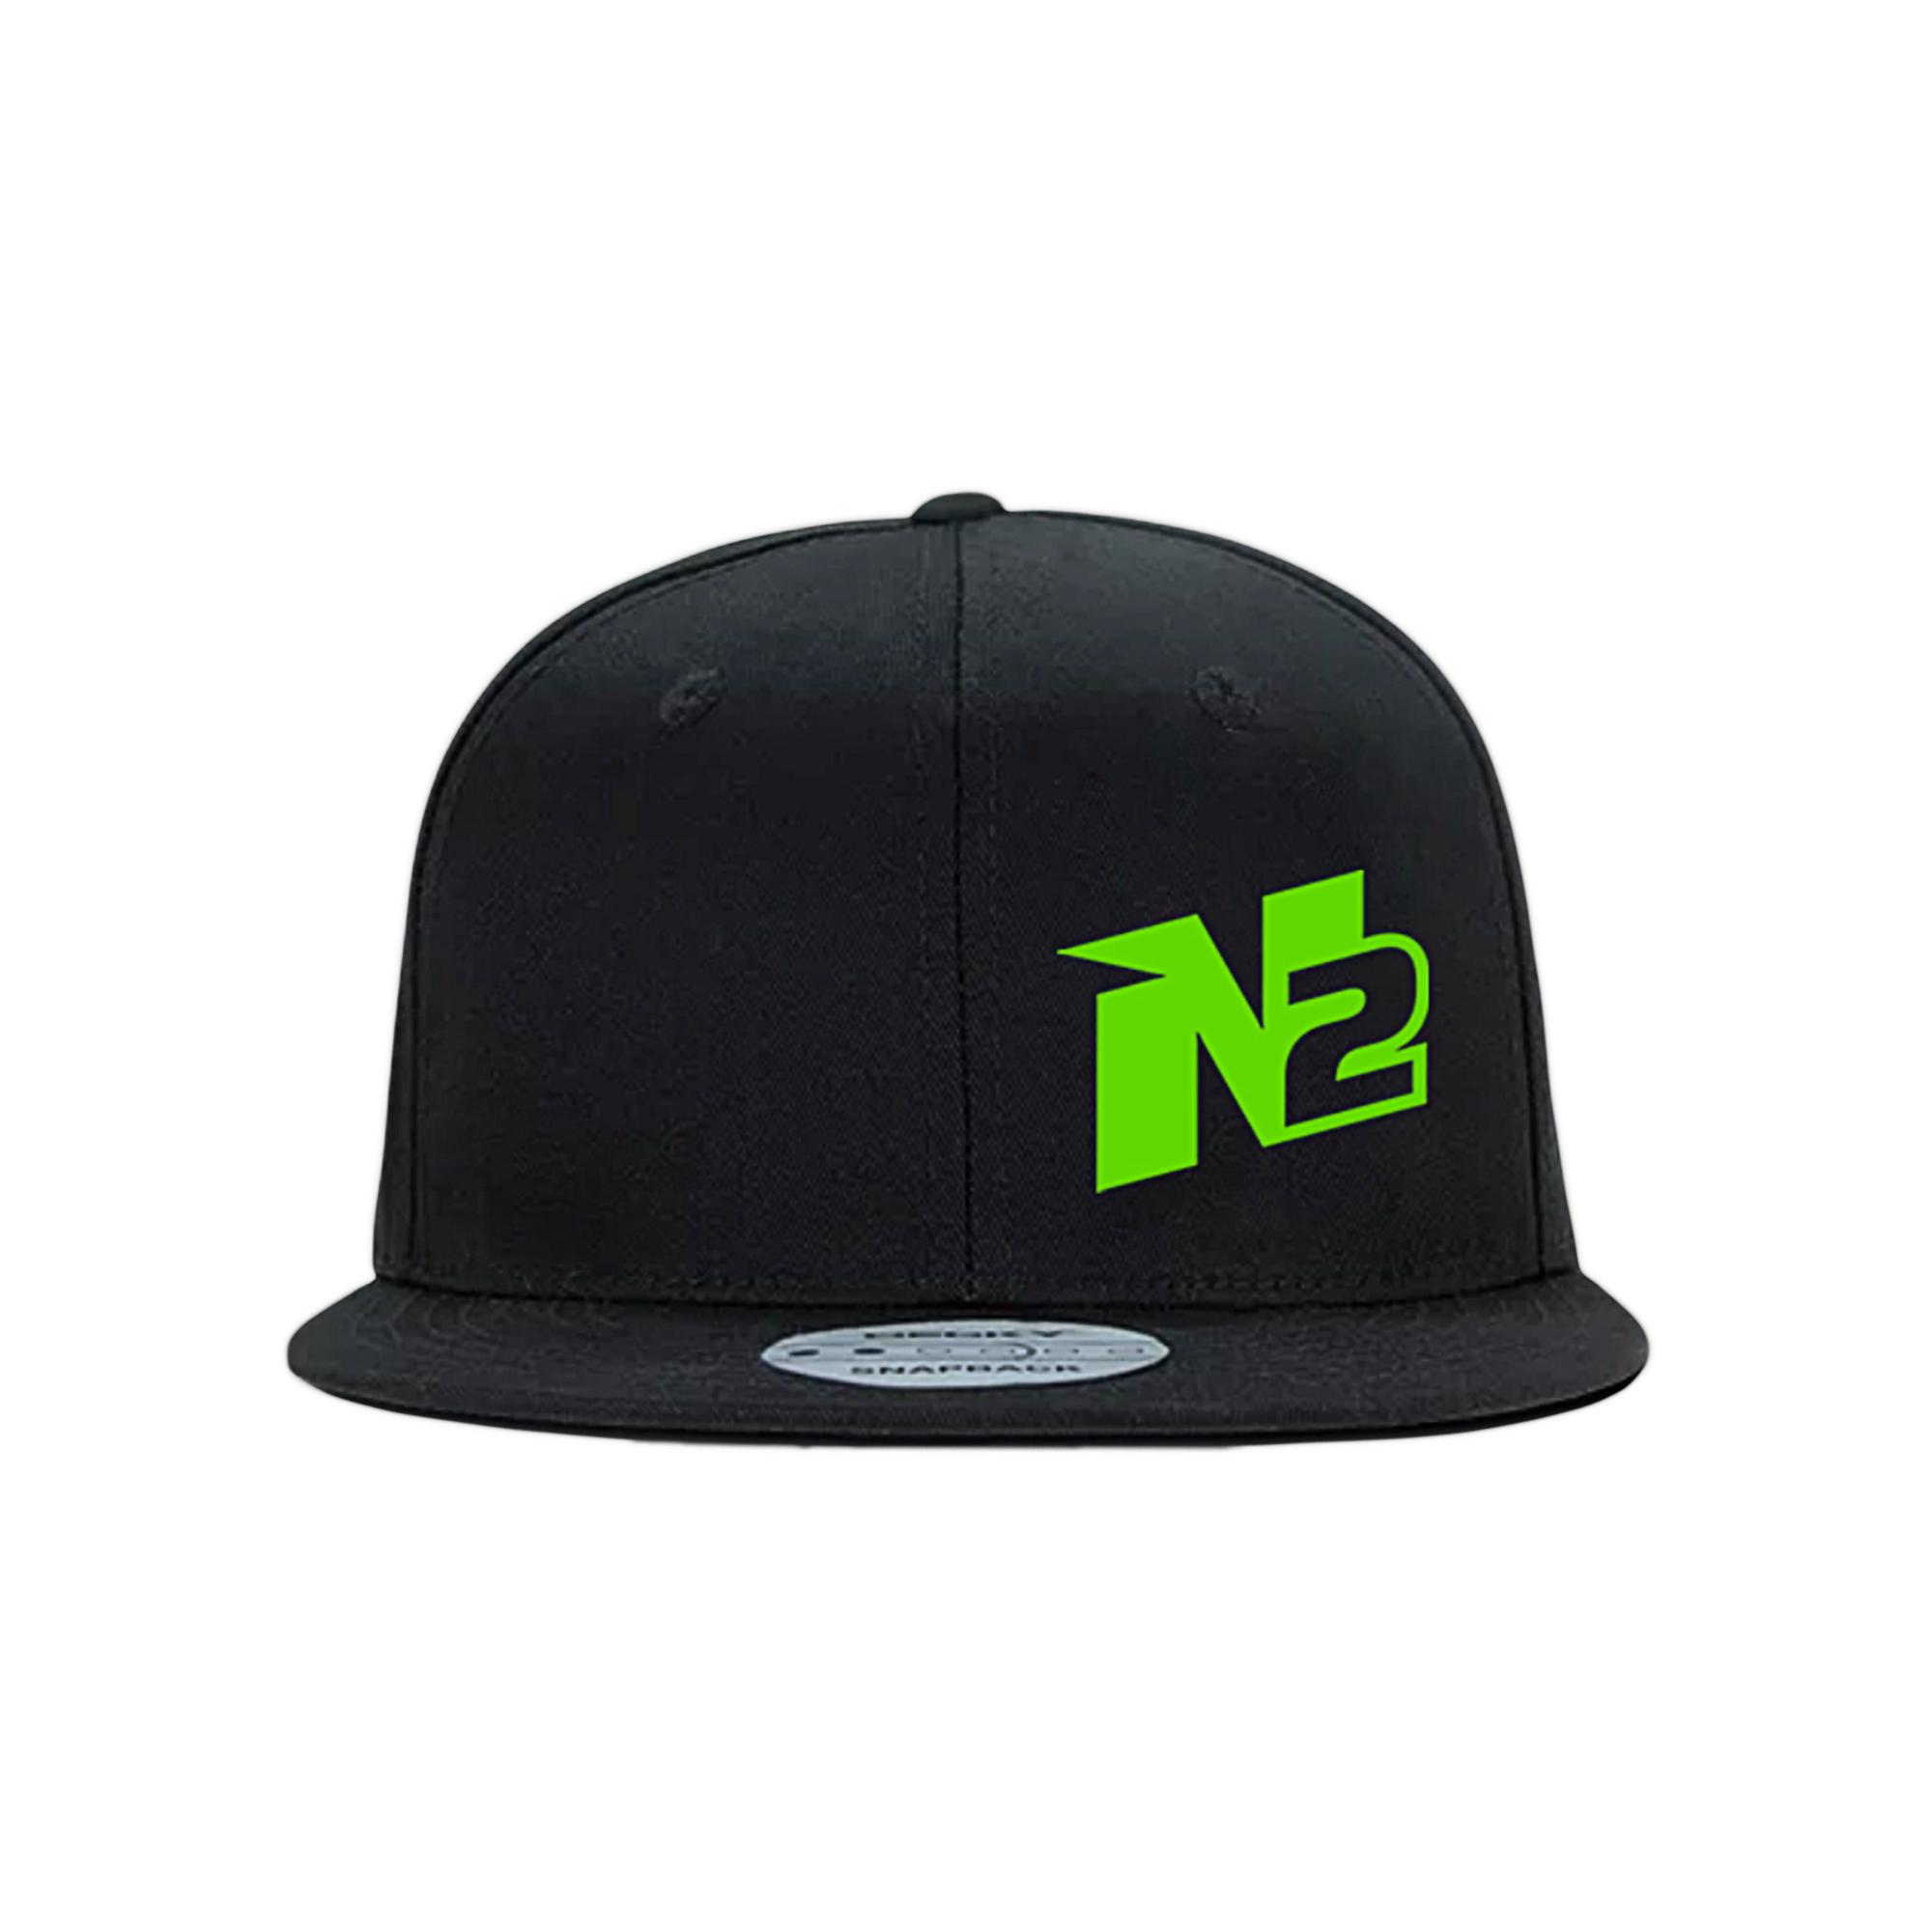 N2 Logo Flat Bill Snapback